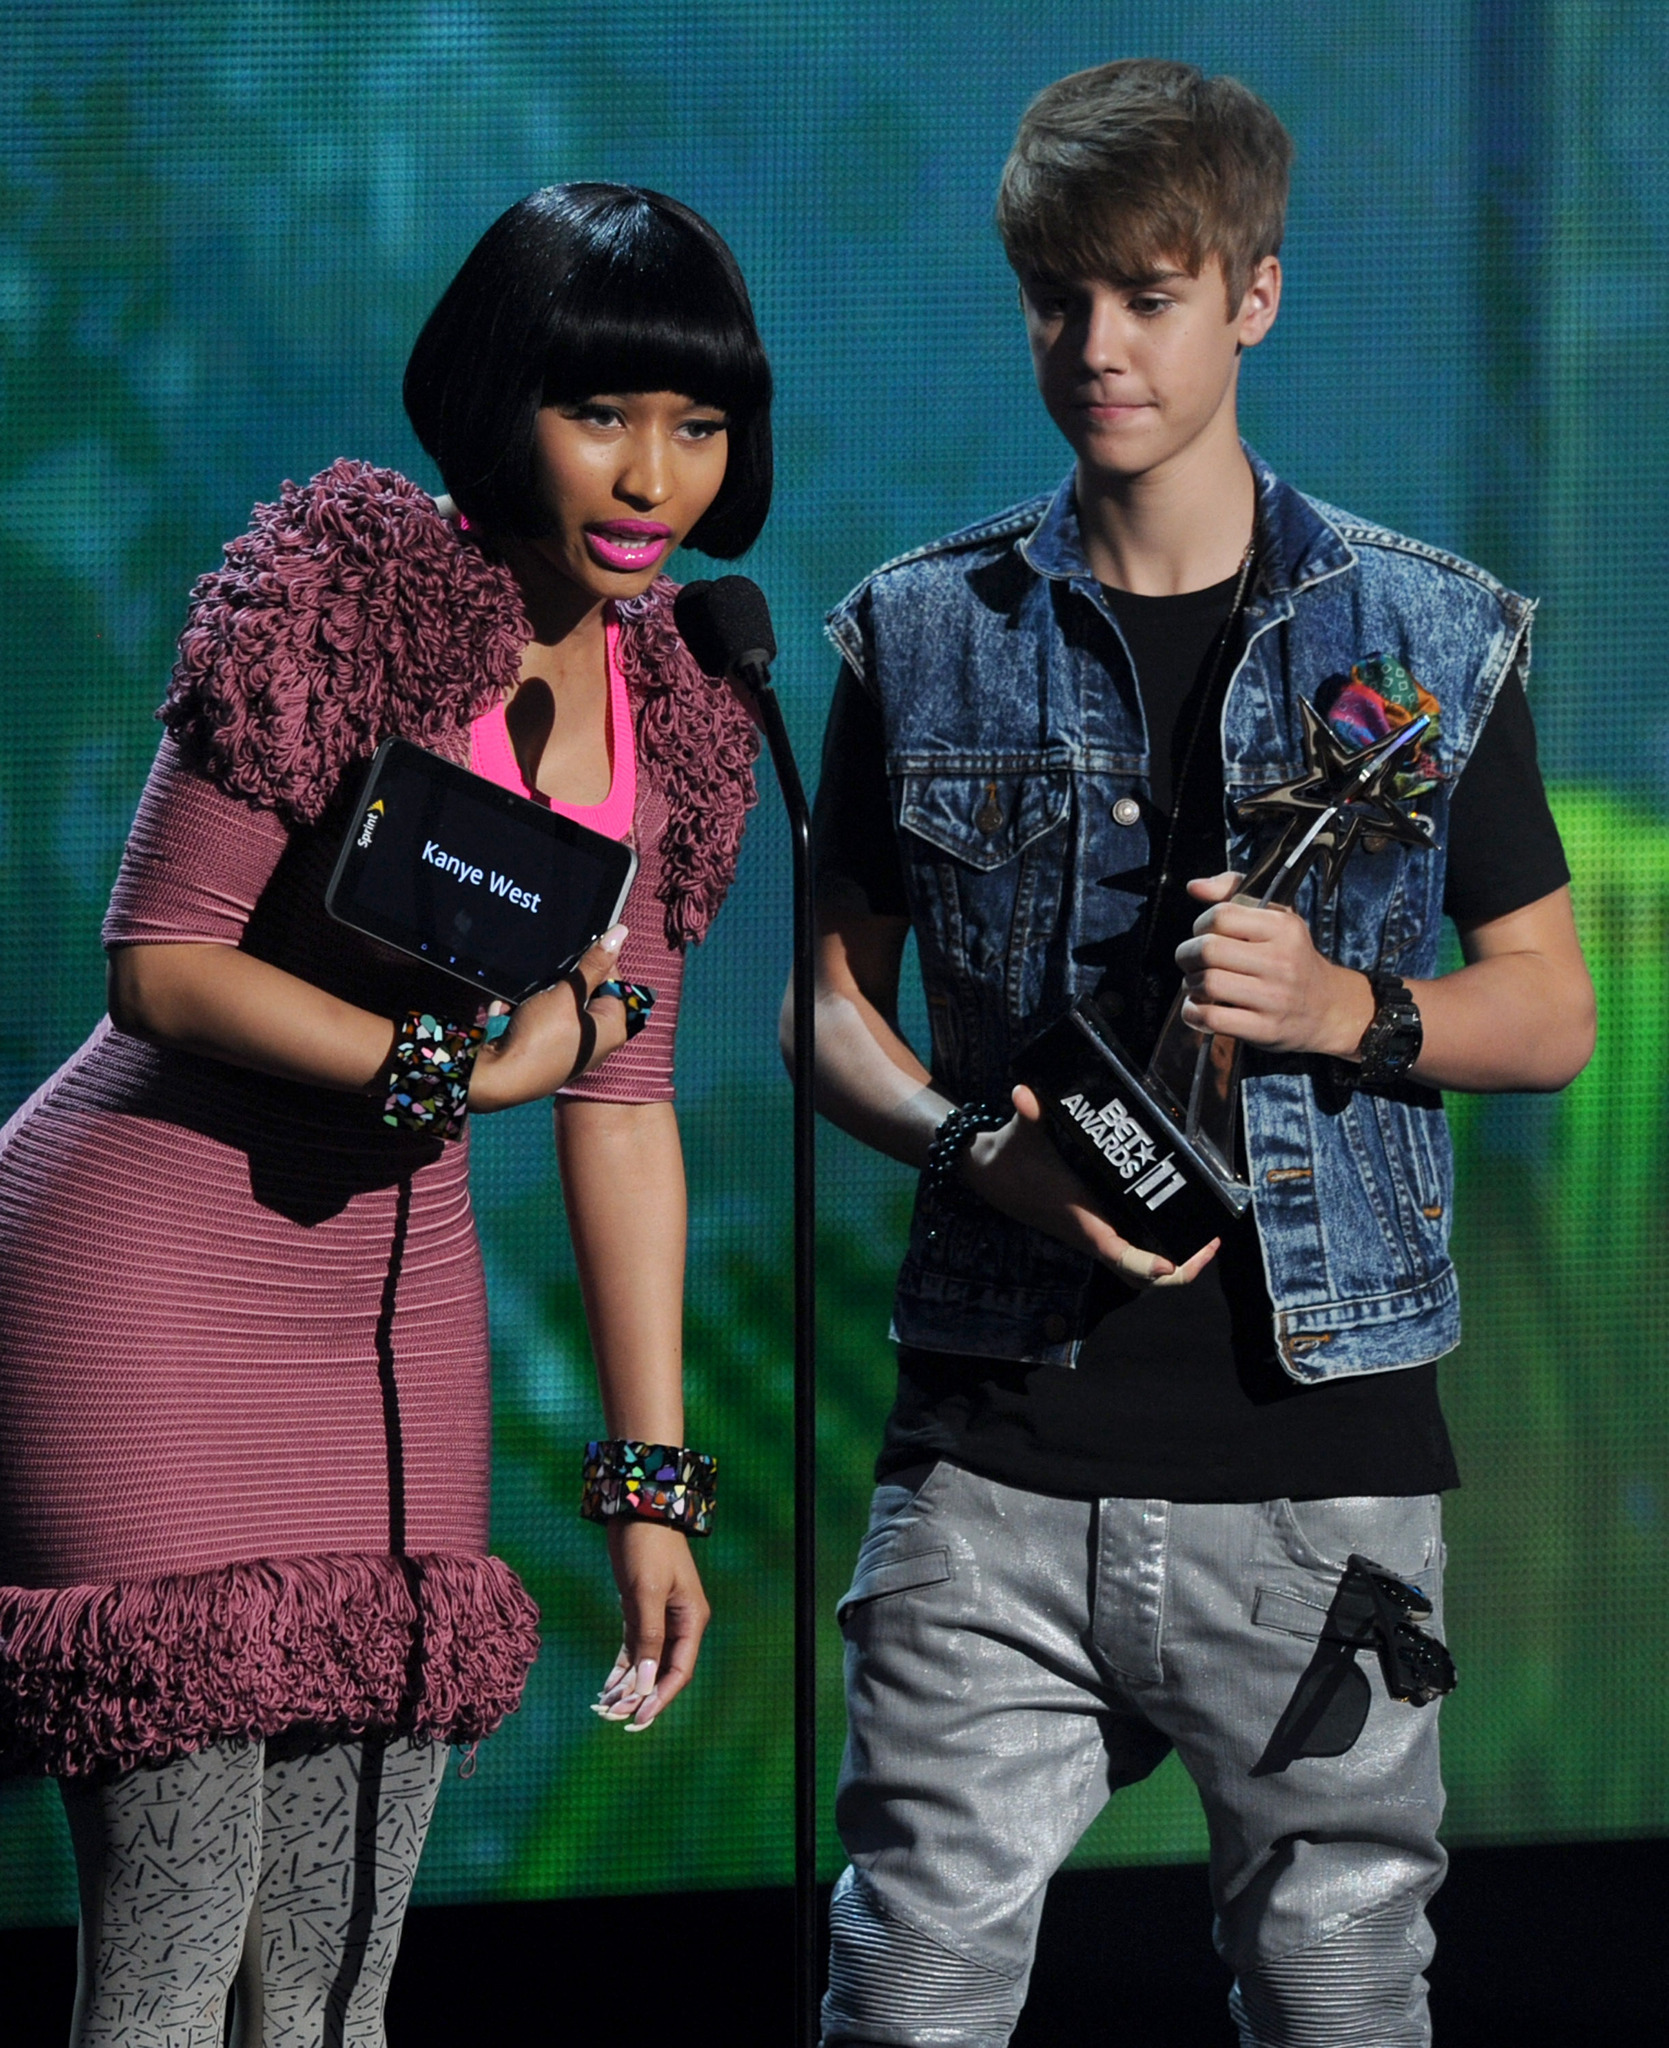 Justin Bieber and Nicki Minaj